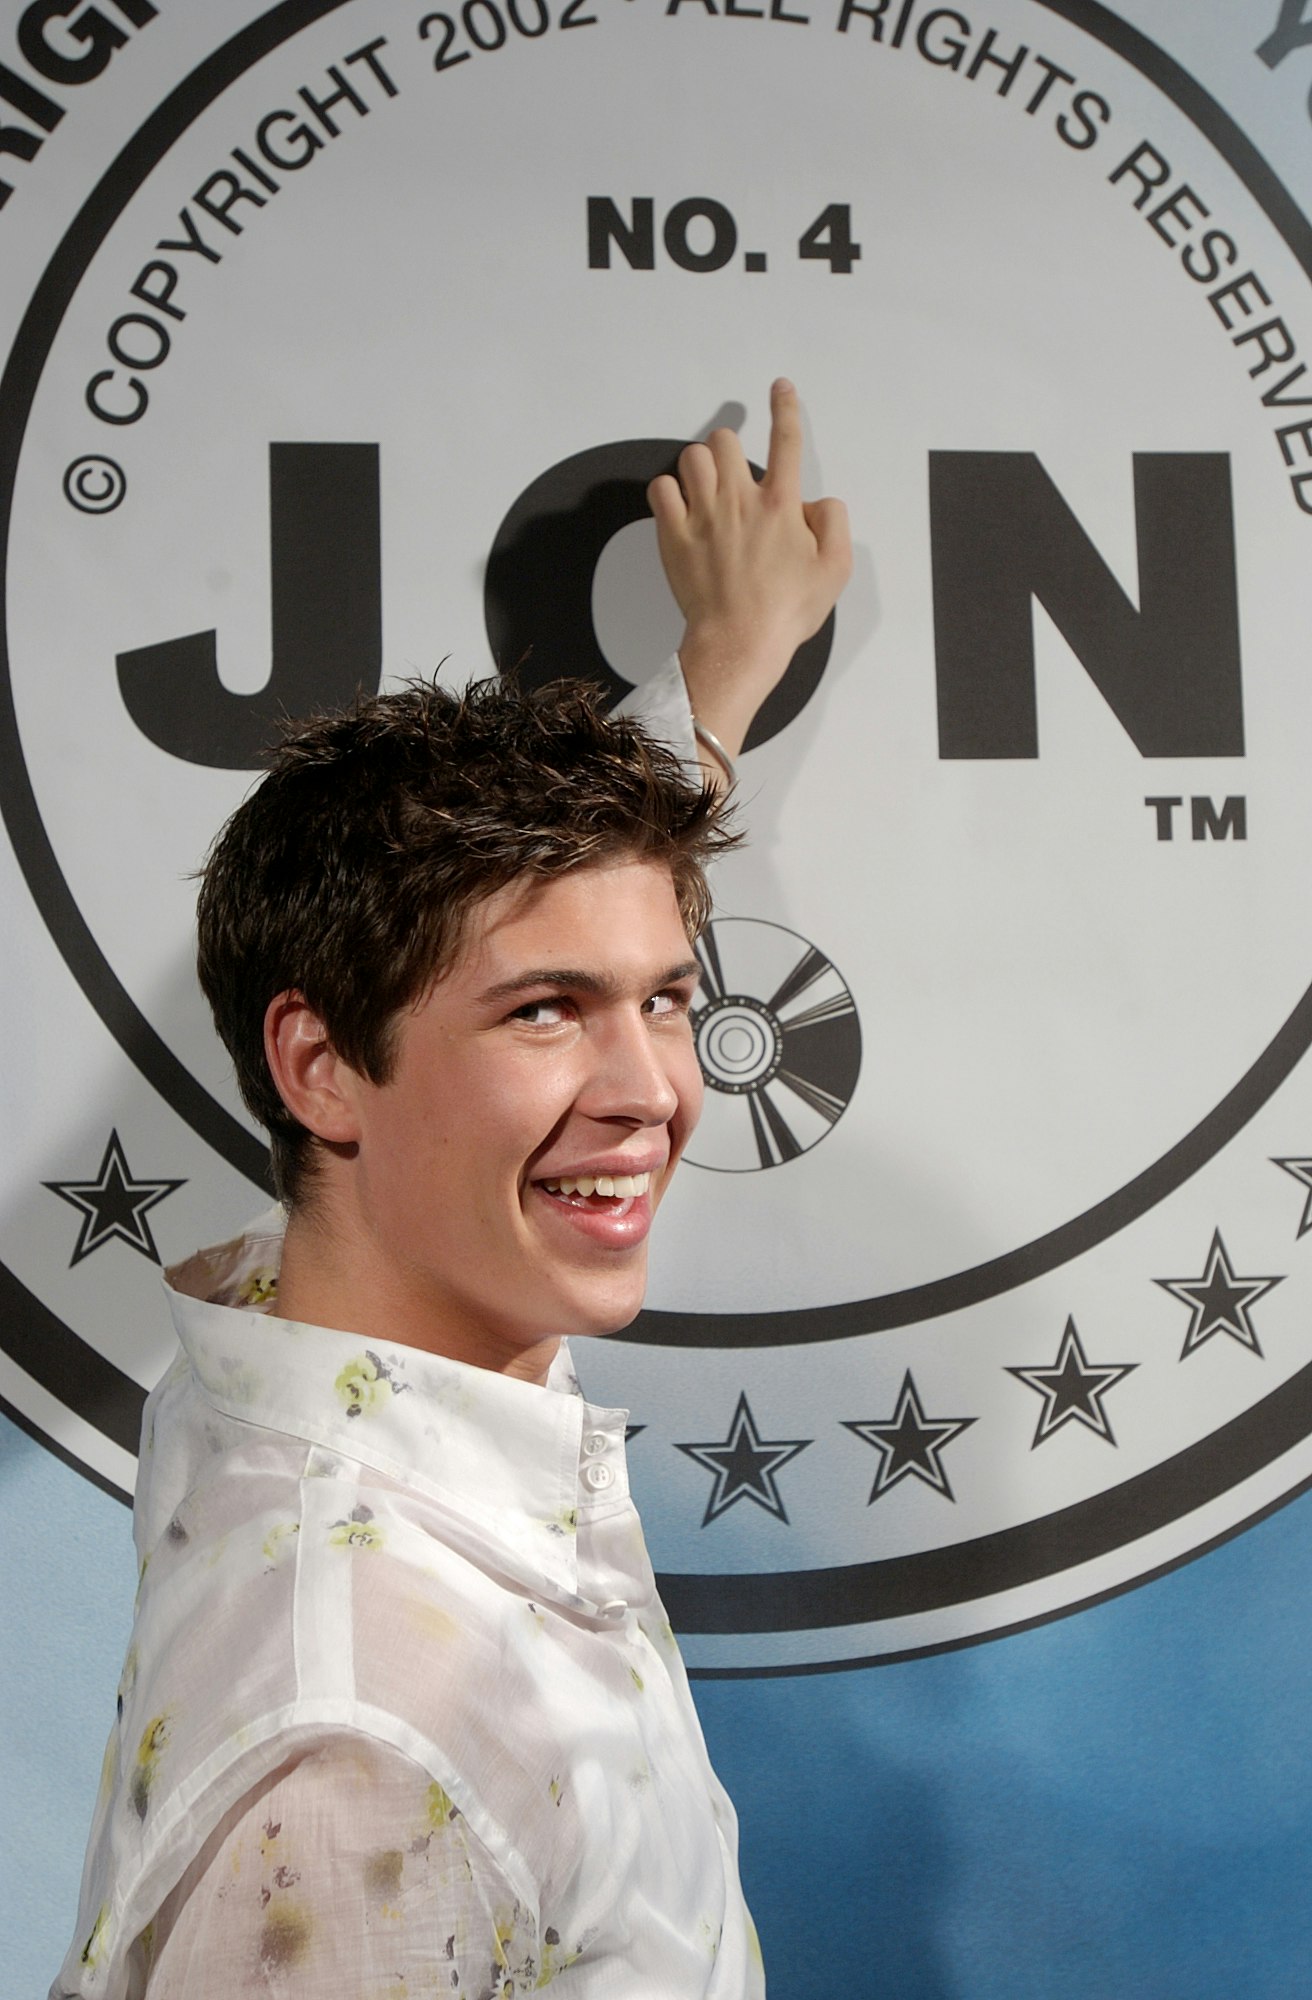 17-årige Jon Nørgaard da han netop havde vundet tv-programmet "Popstars".
